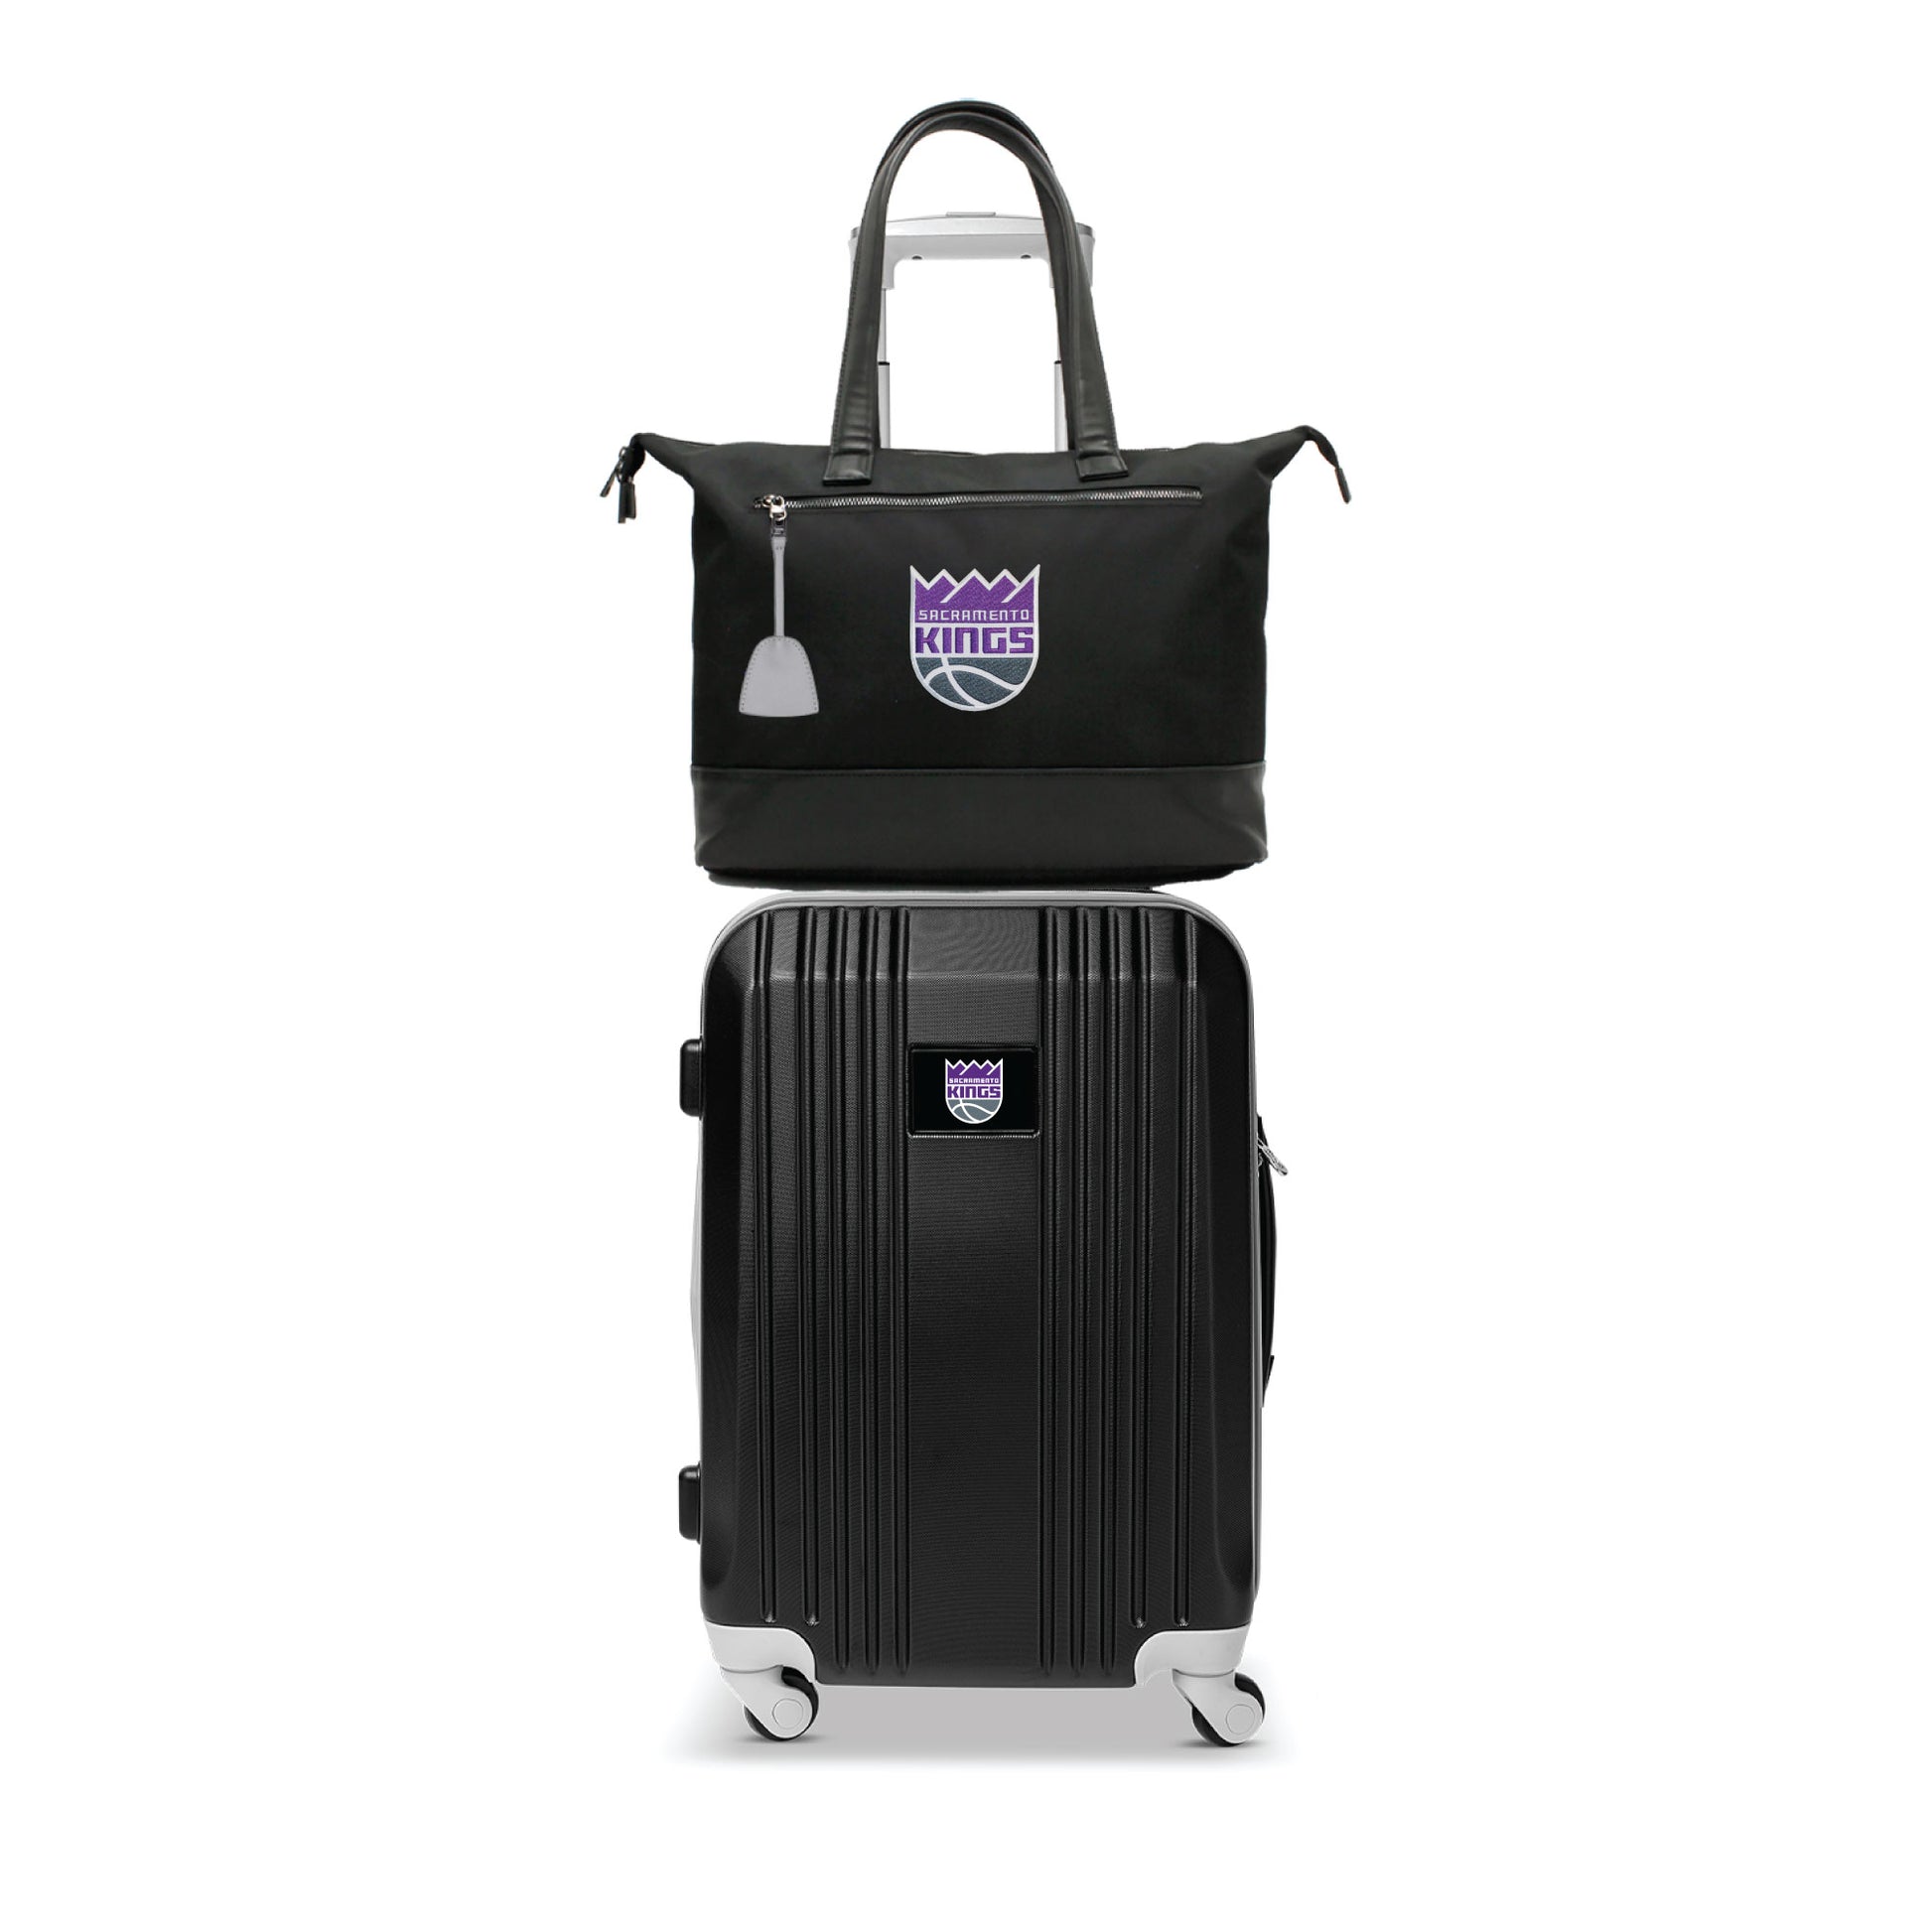 Sacramento Kings Premium Laptop Tote Bag and Luggage Set